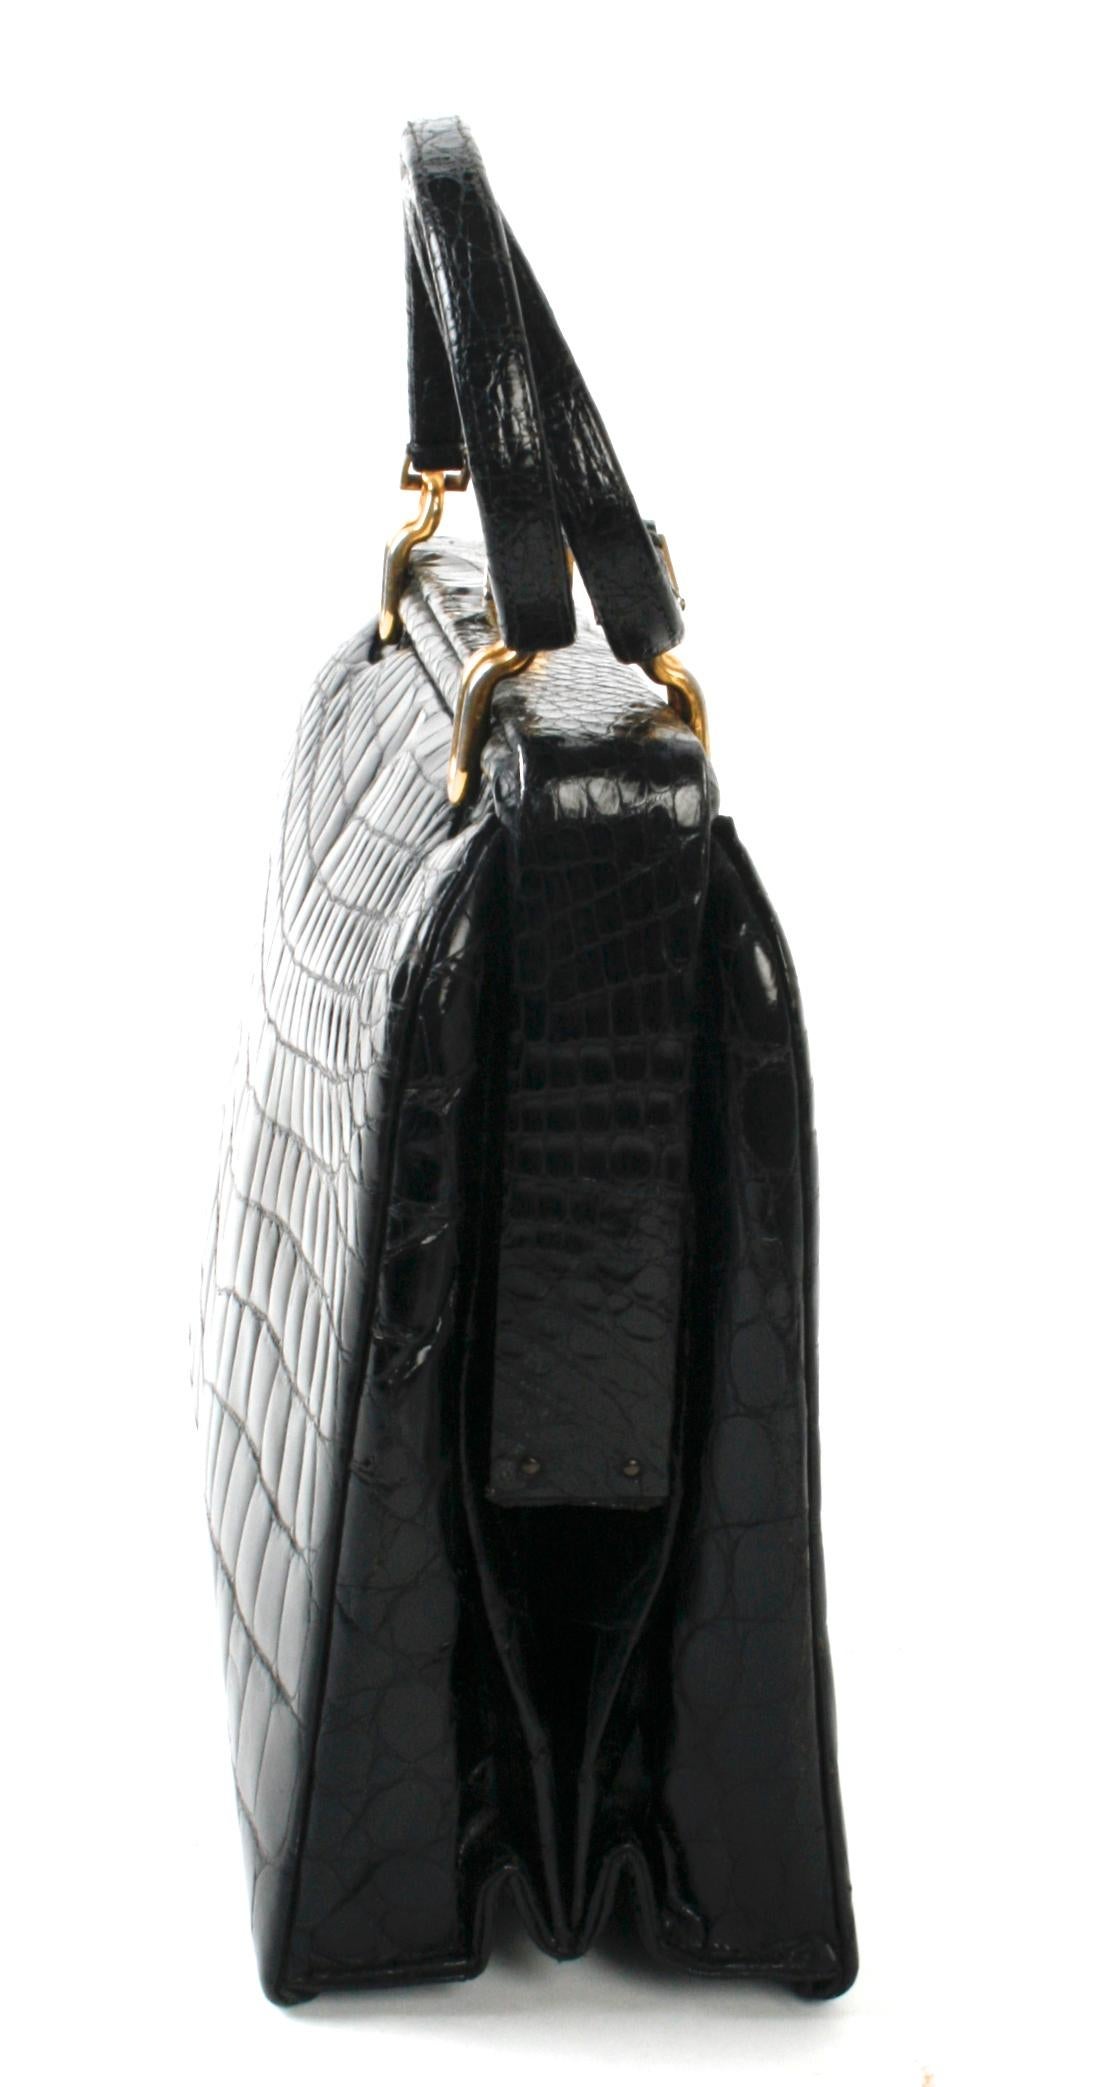 black handbag with gold hardware